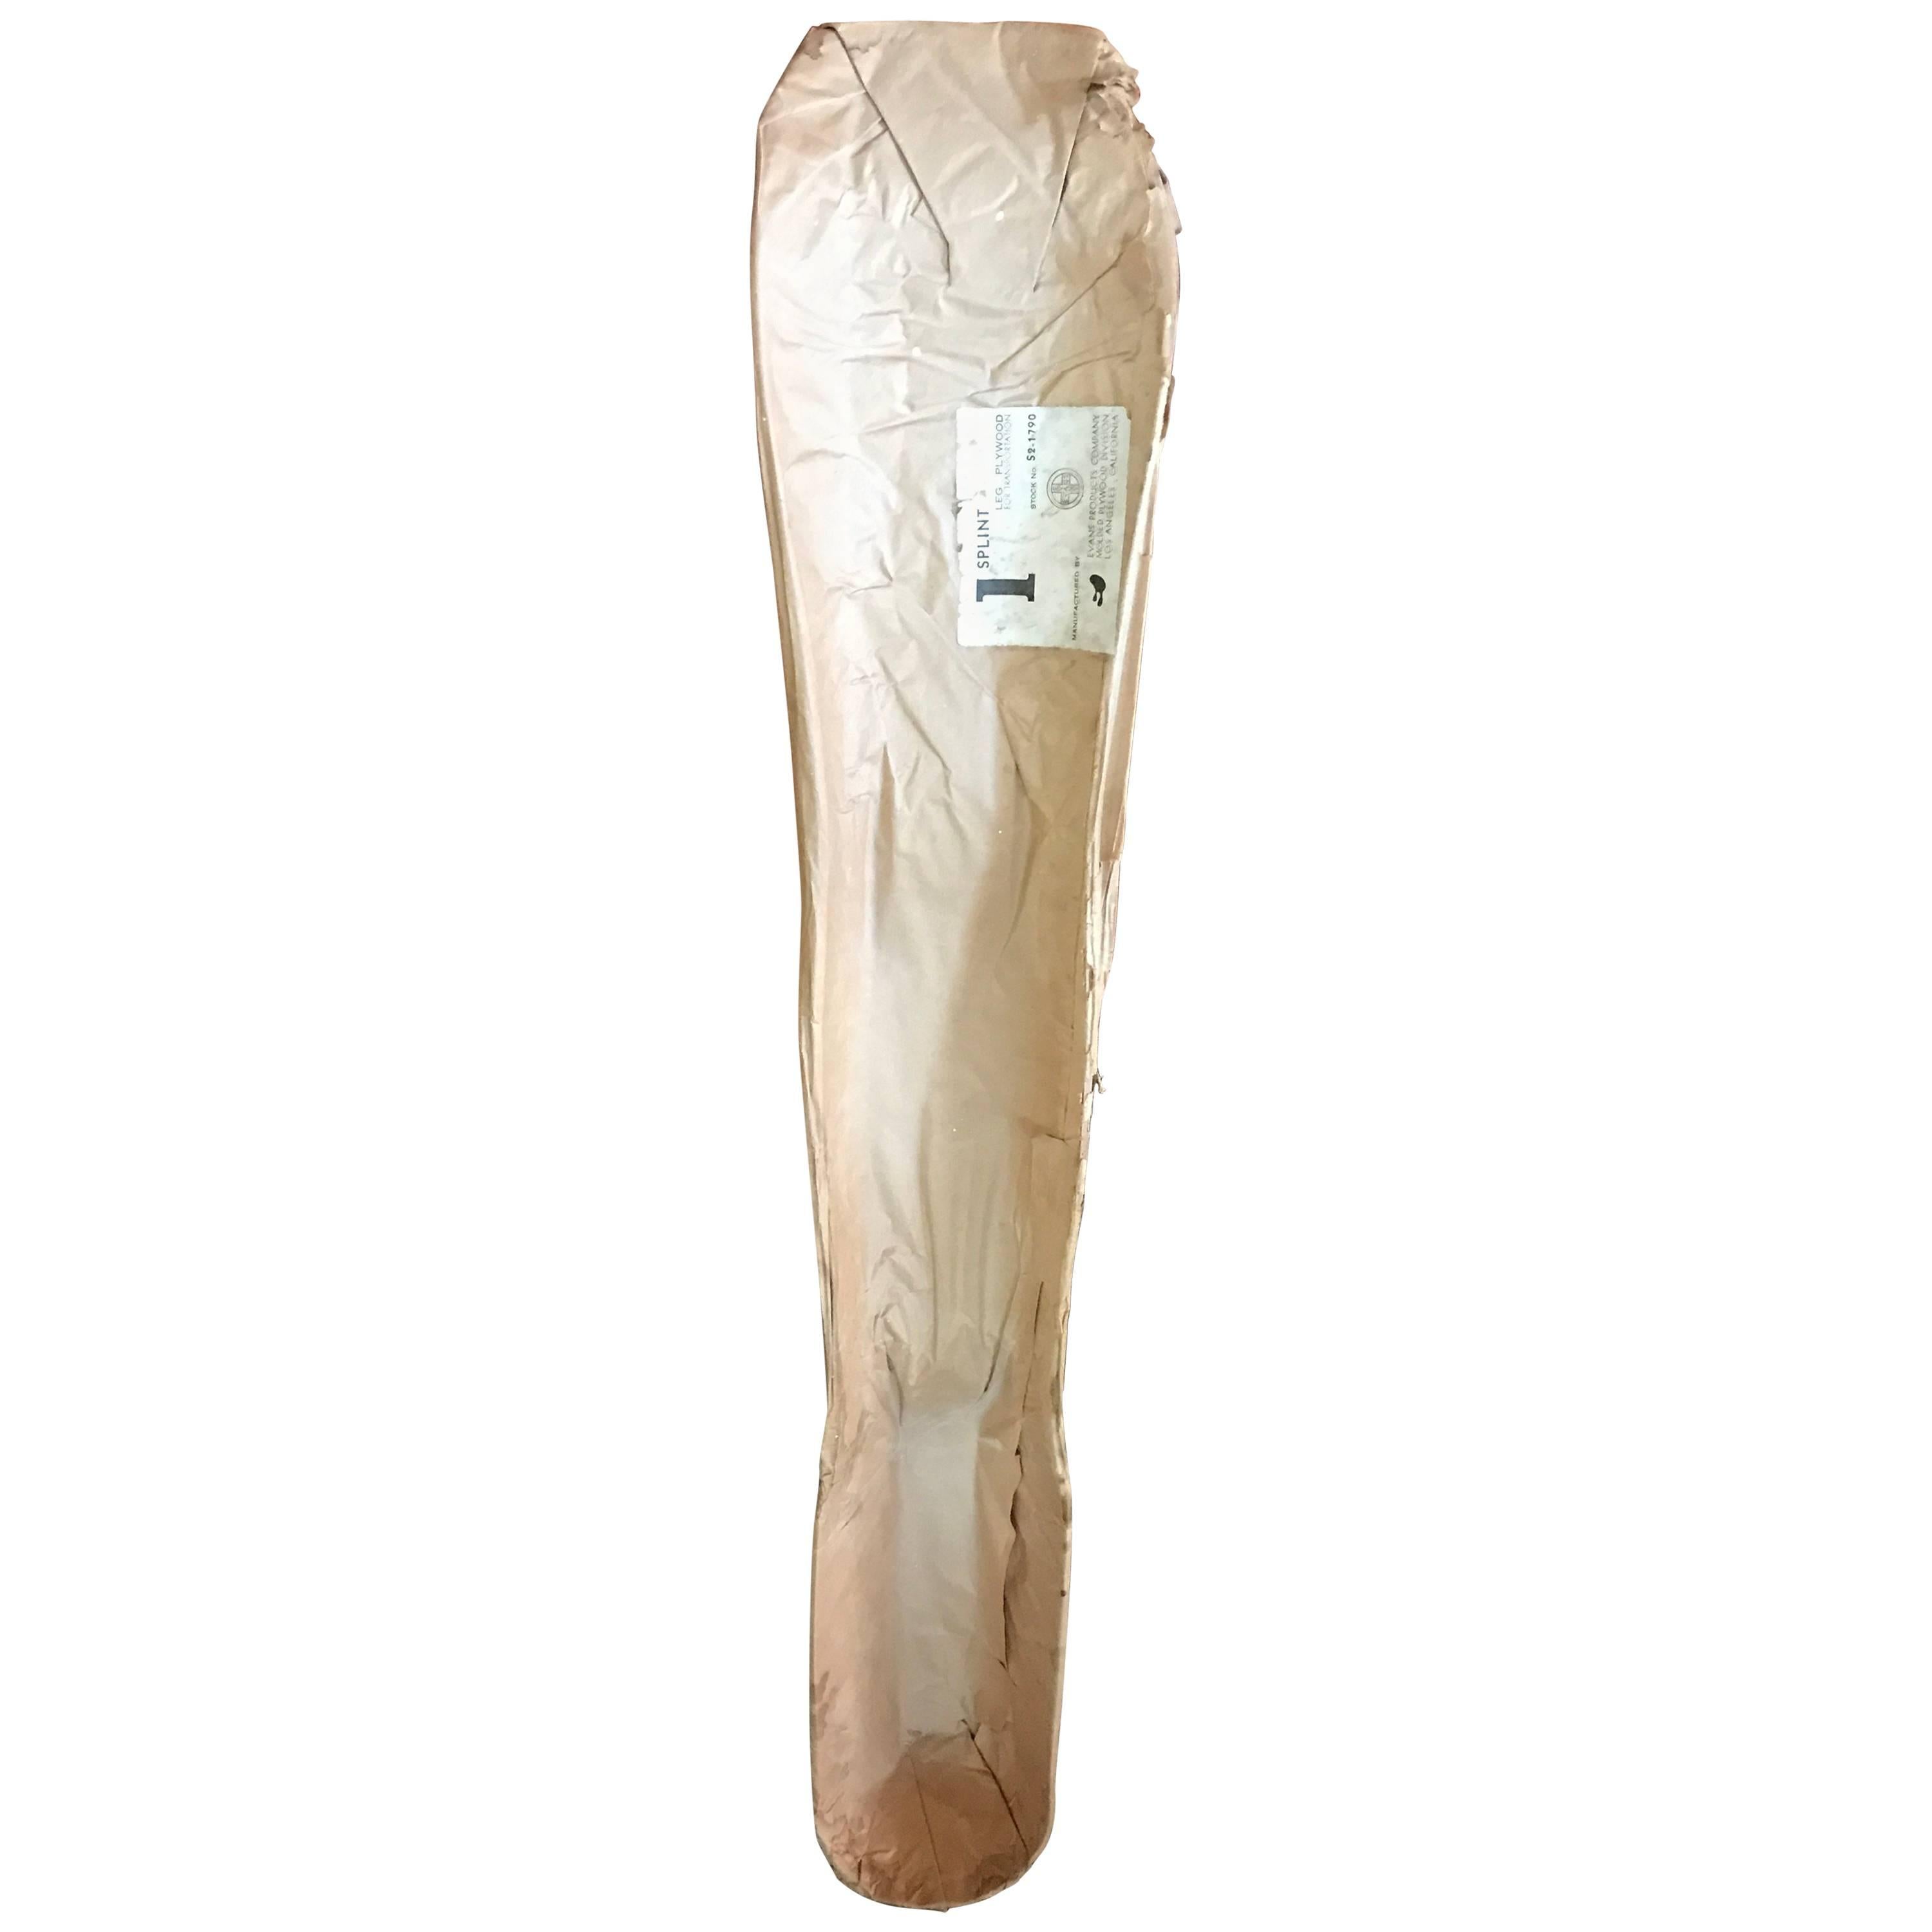 Eames Leg Splint Original Packaging New Old Stock